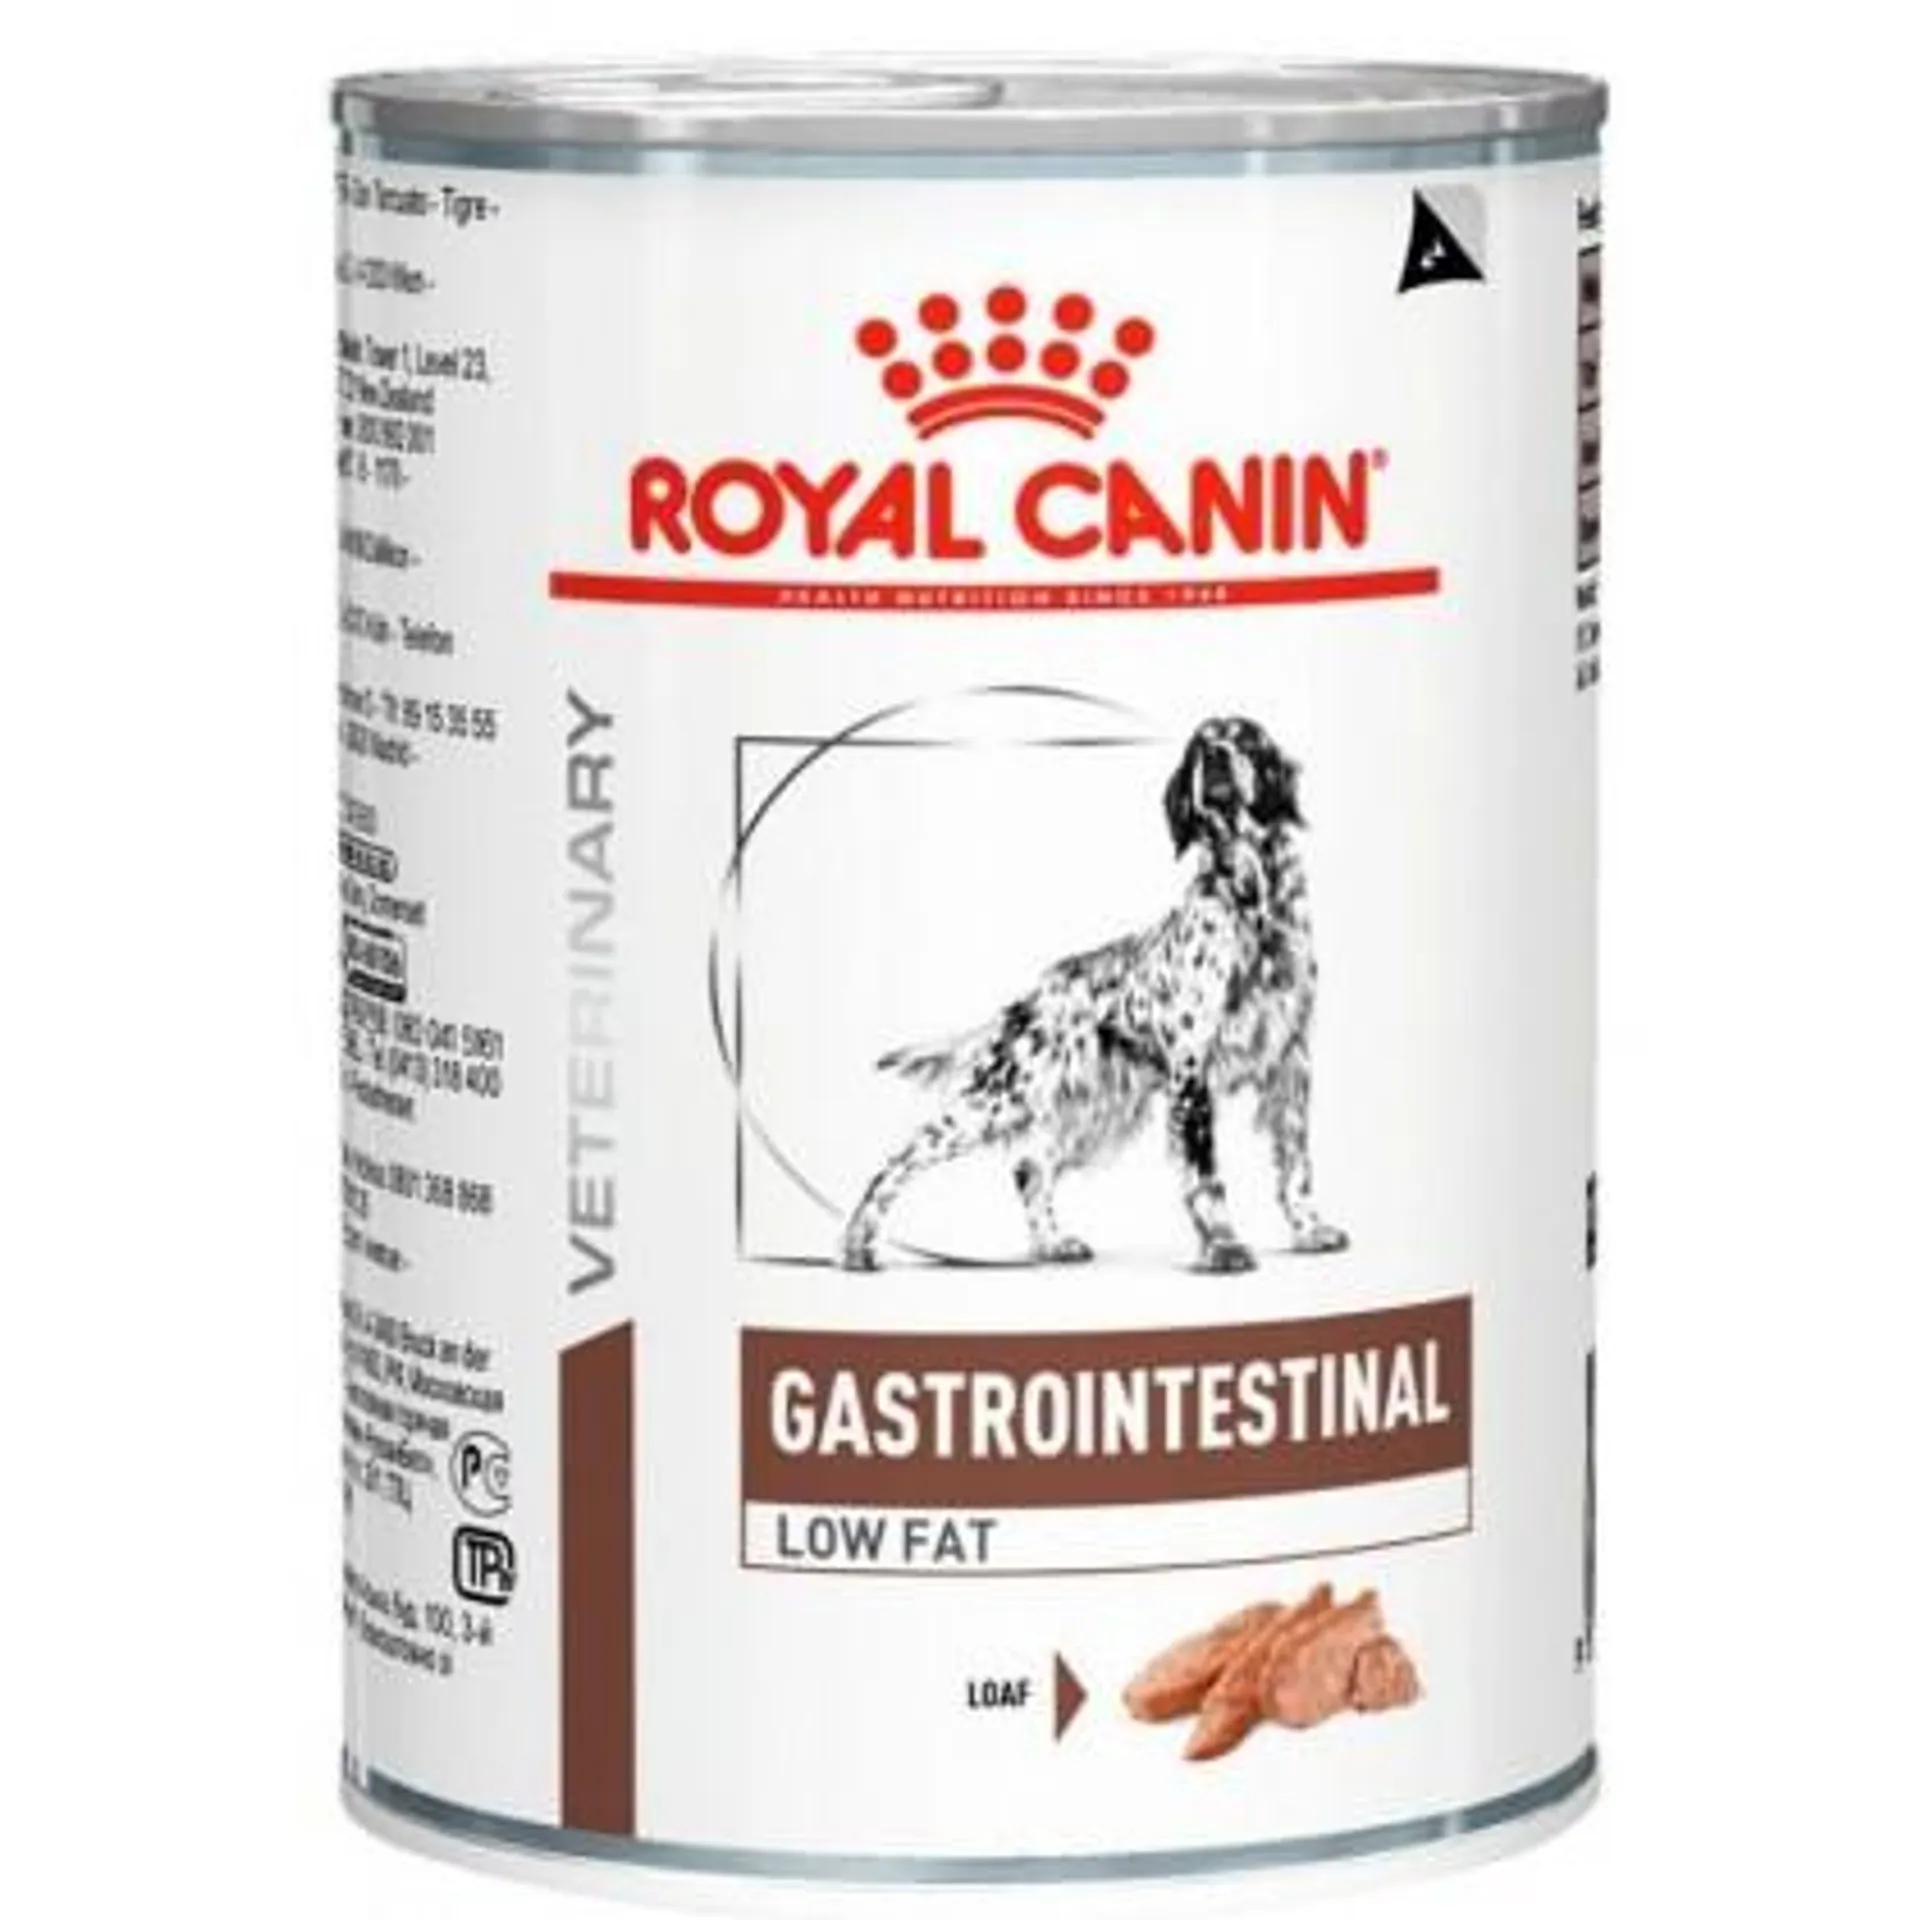 Royal Canin Gastrointestinal Low Fat Perro Latas